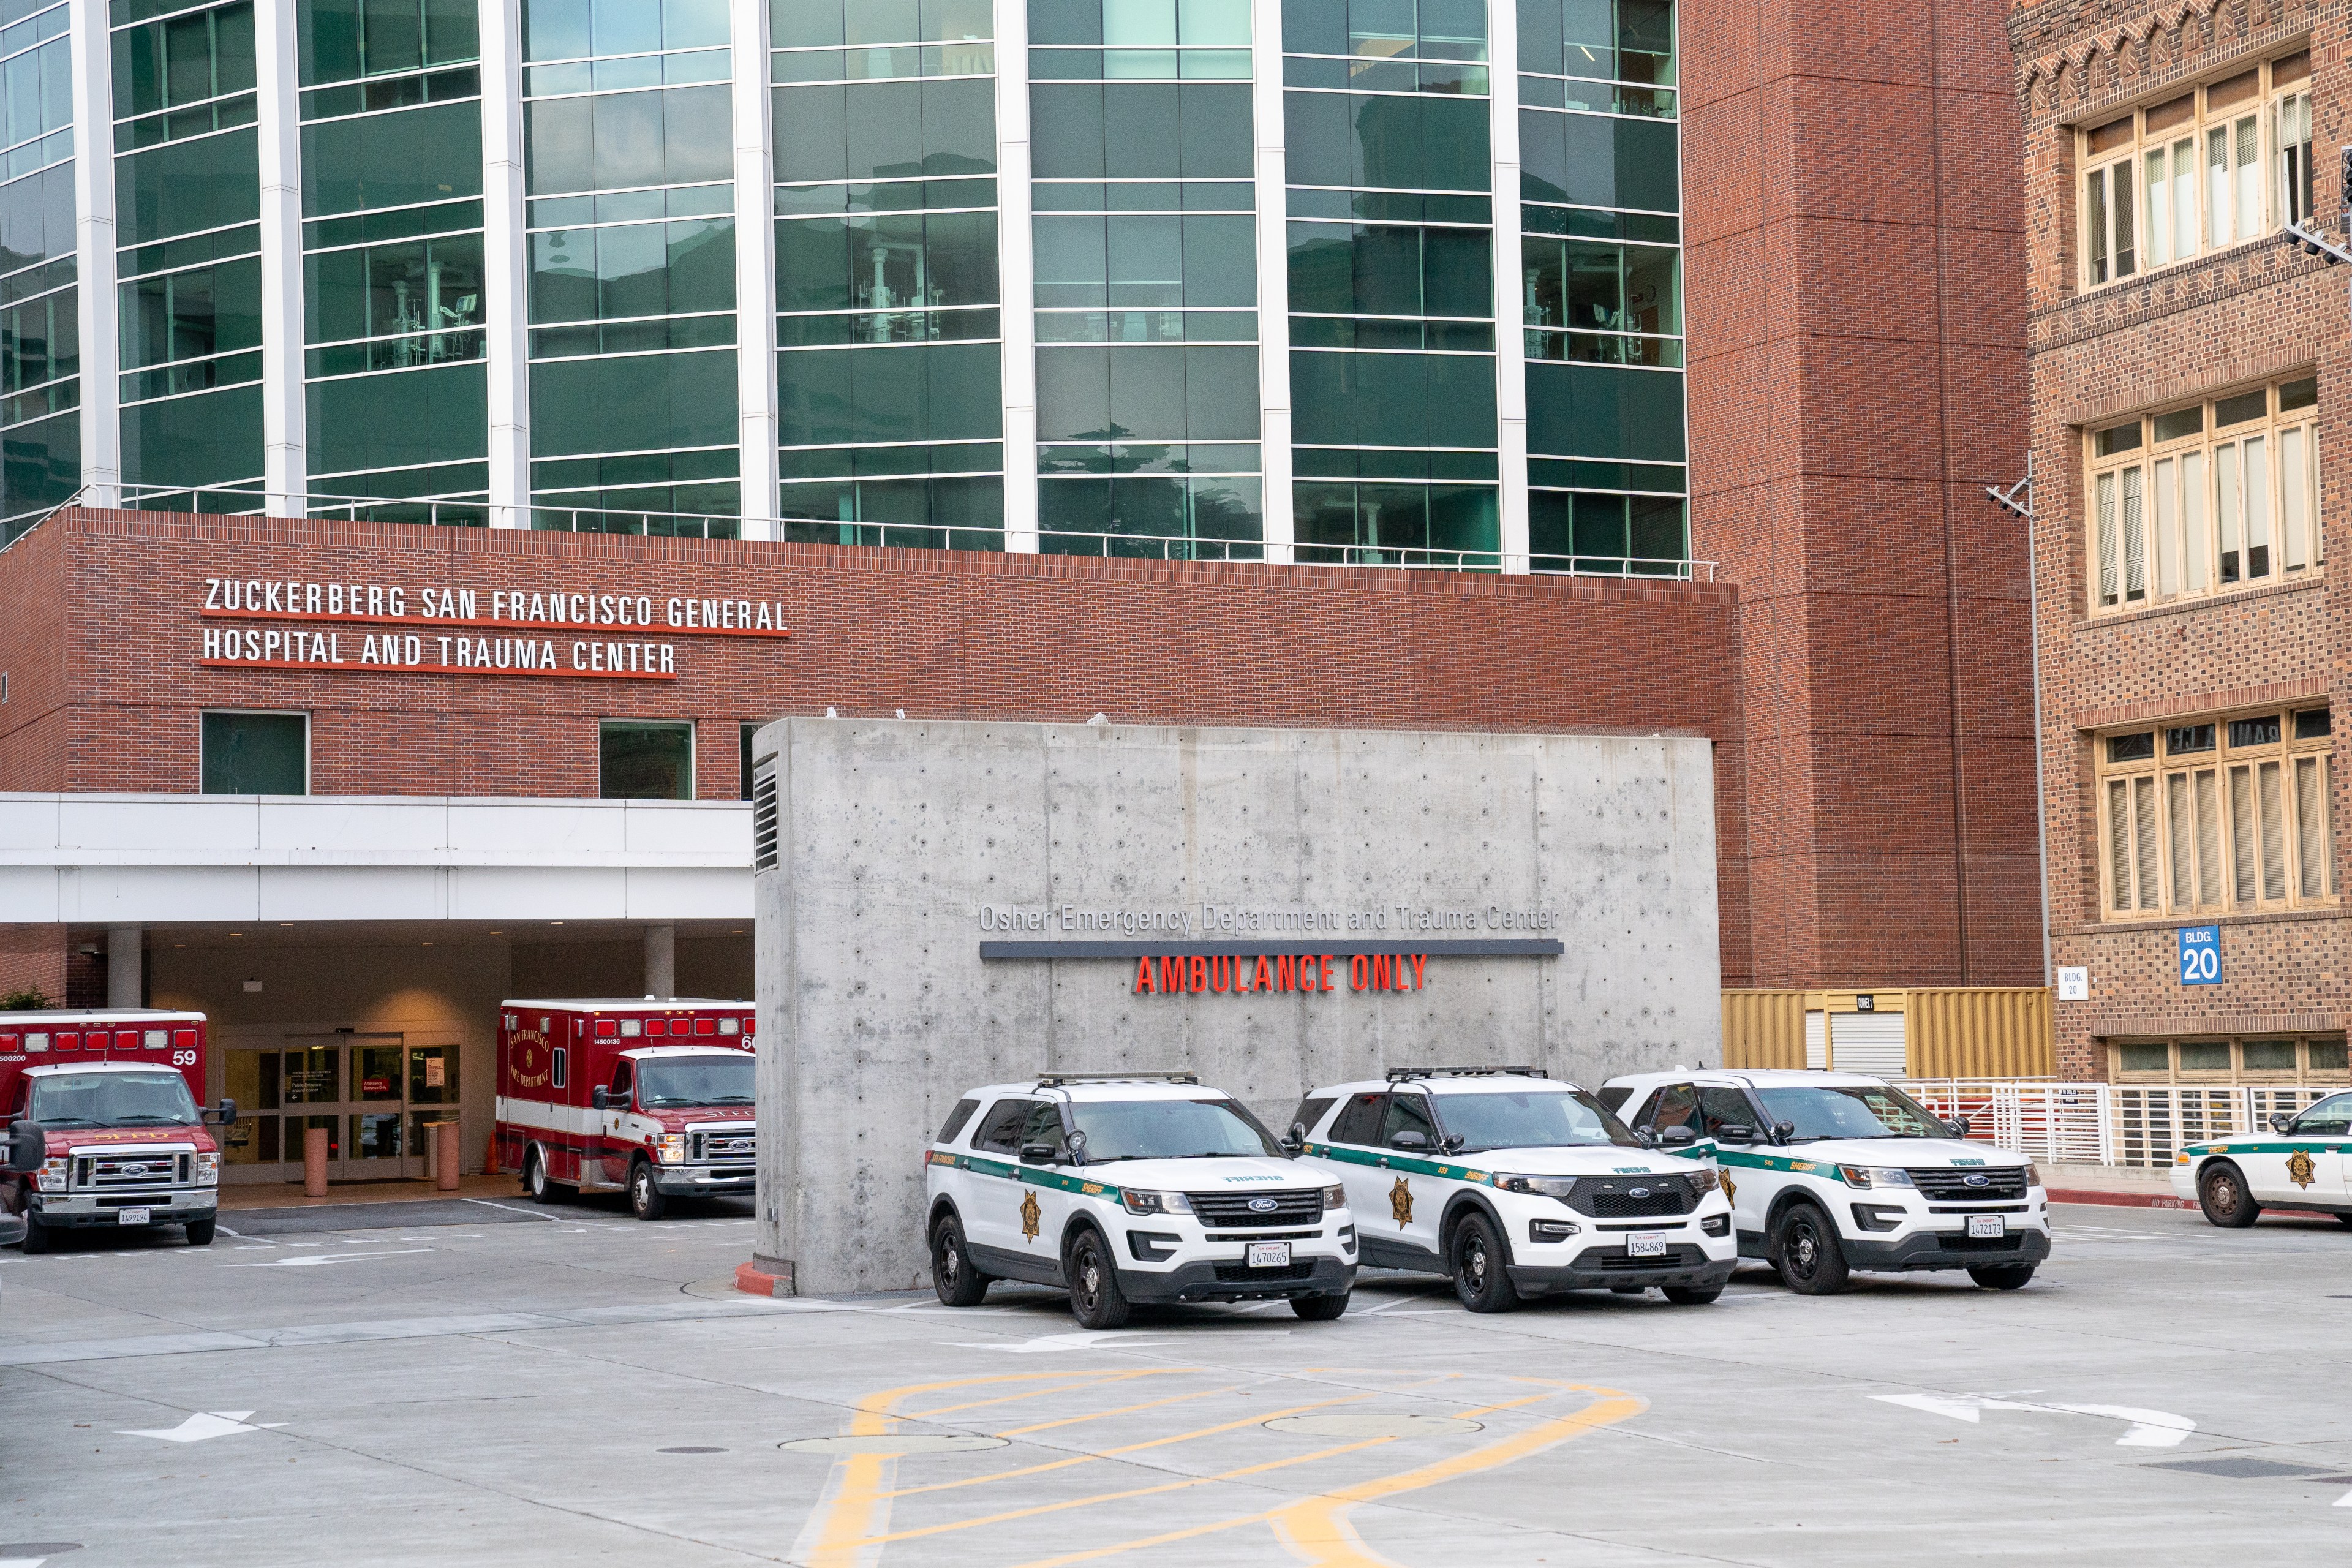 Sheriff's deputies patrol vehicles sit parked outside a hospital.